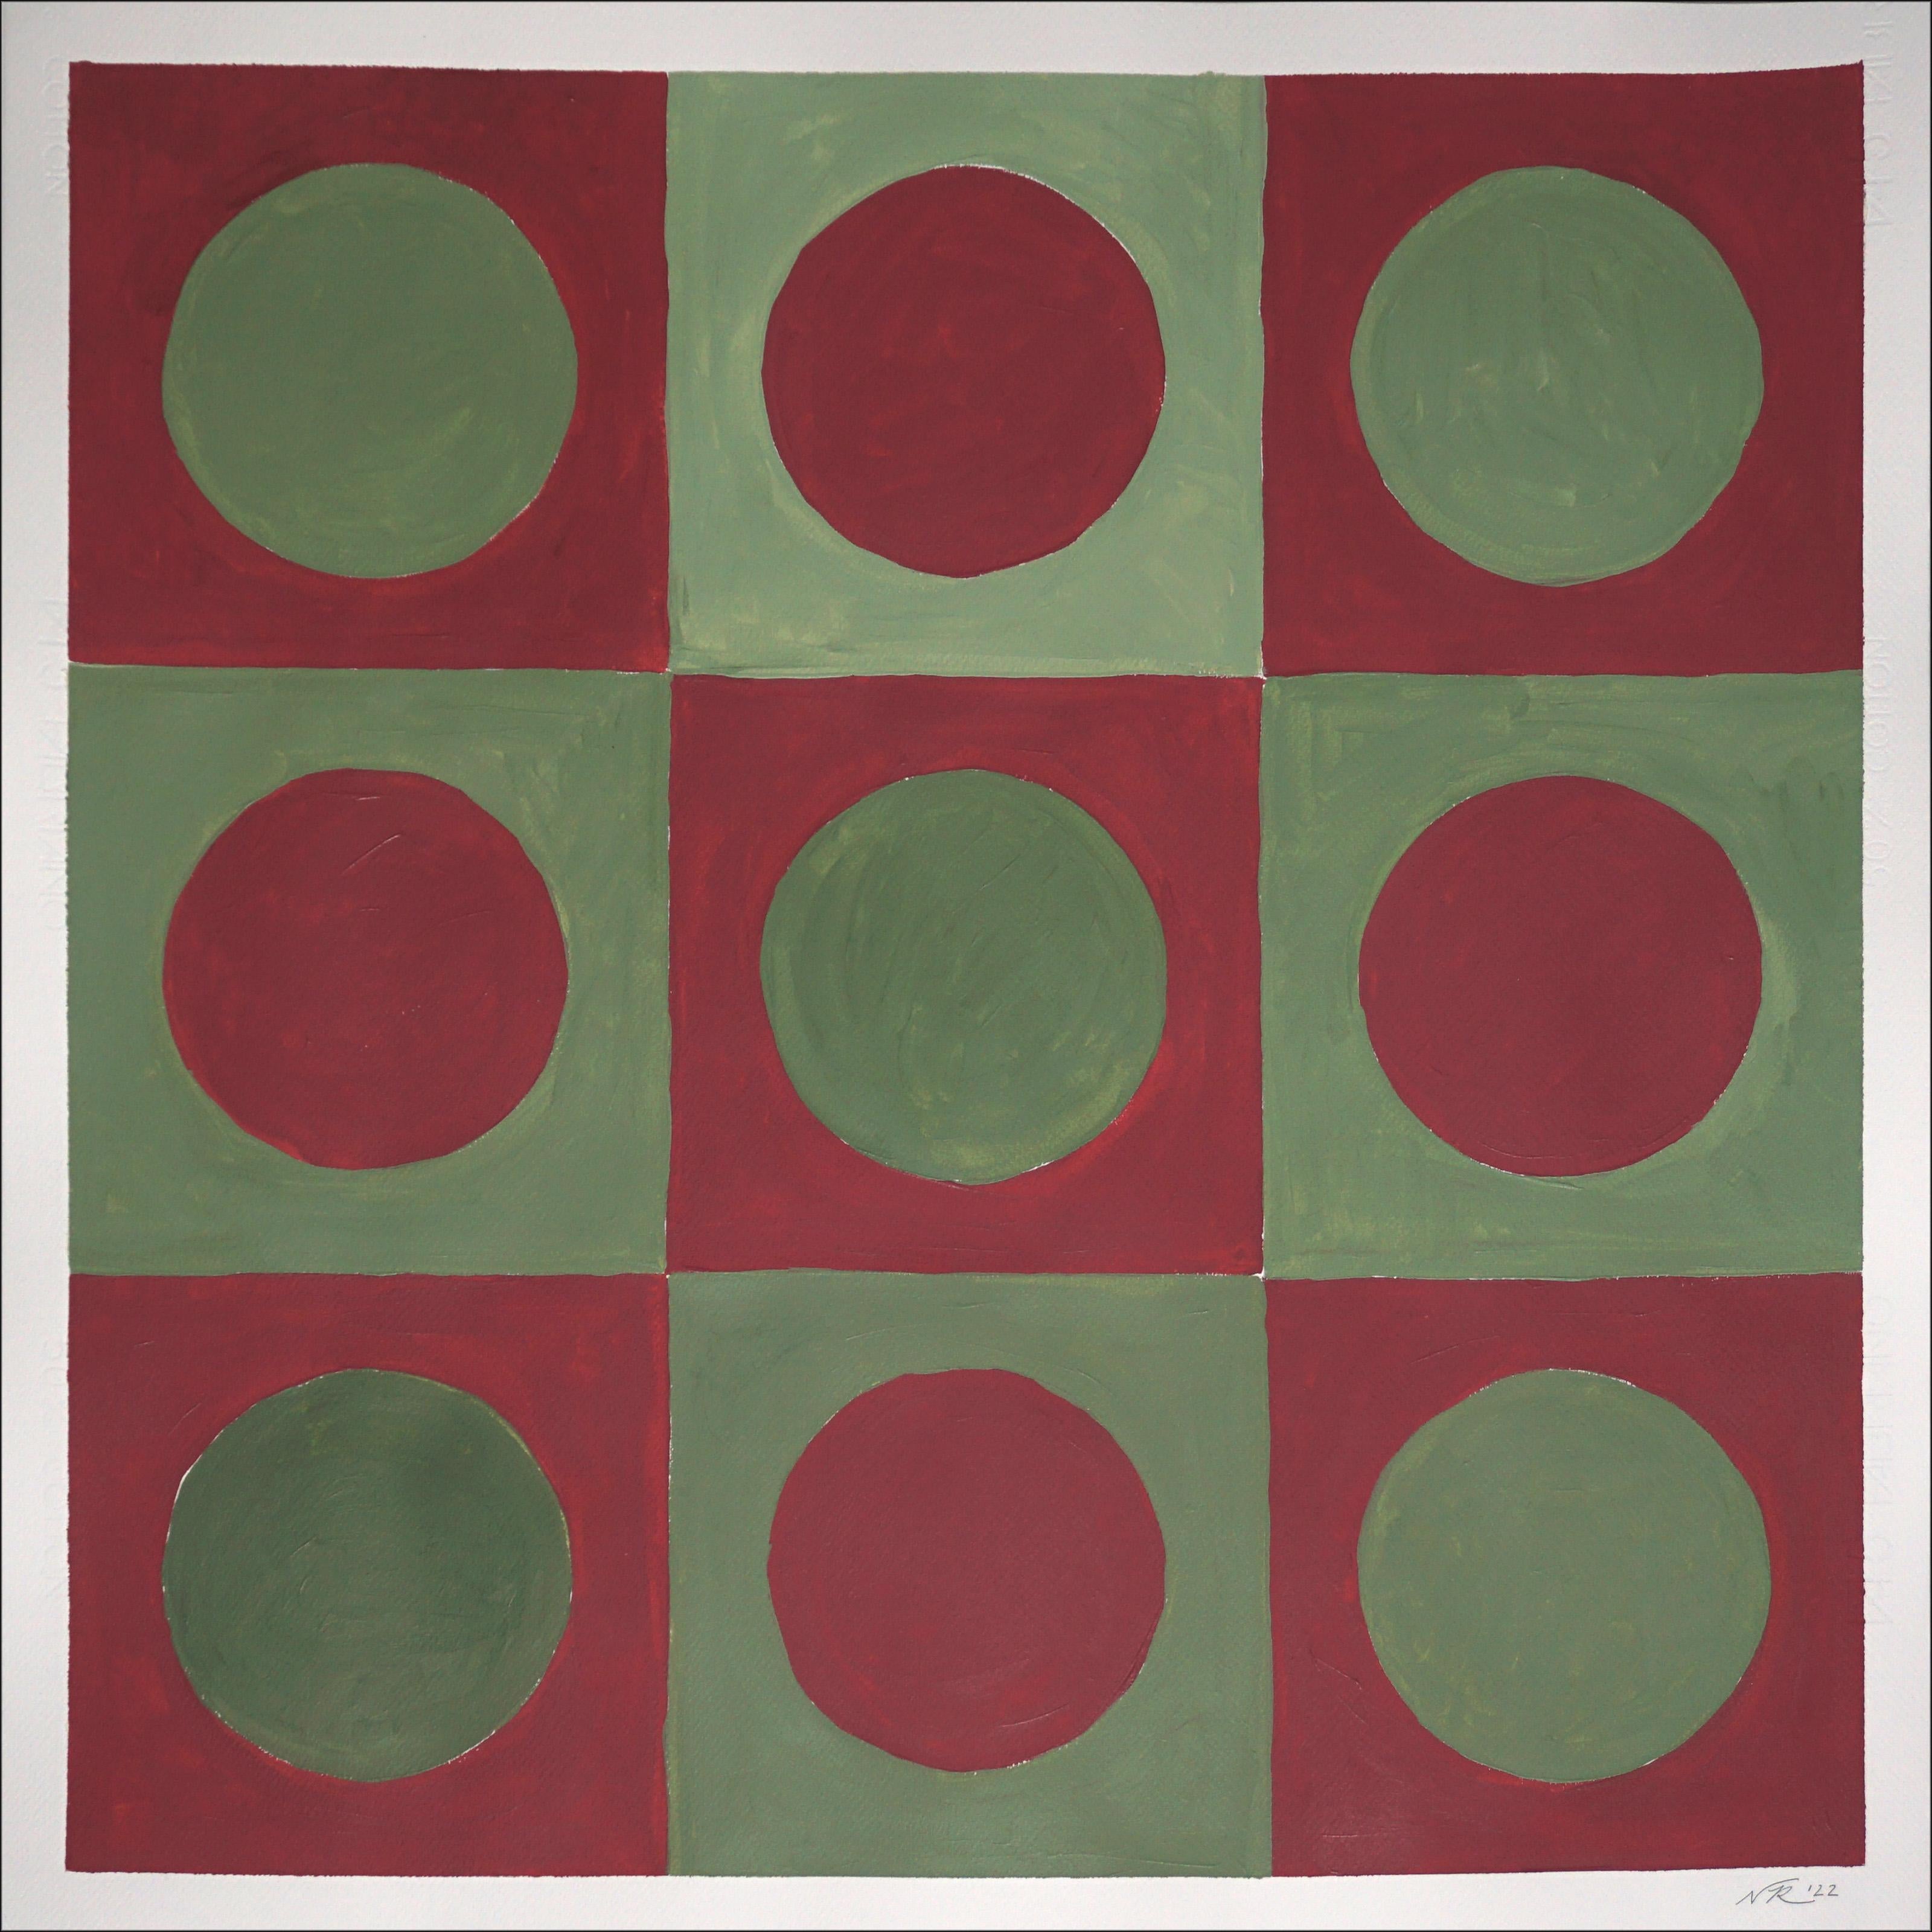 Forest Tile Grid, Abstraktes geometrisches Muster in Grün und Rot, Classy Tones 2022